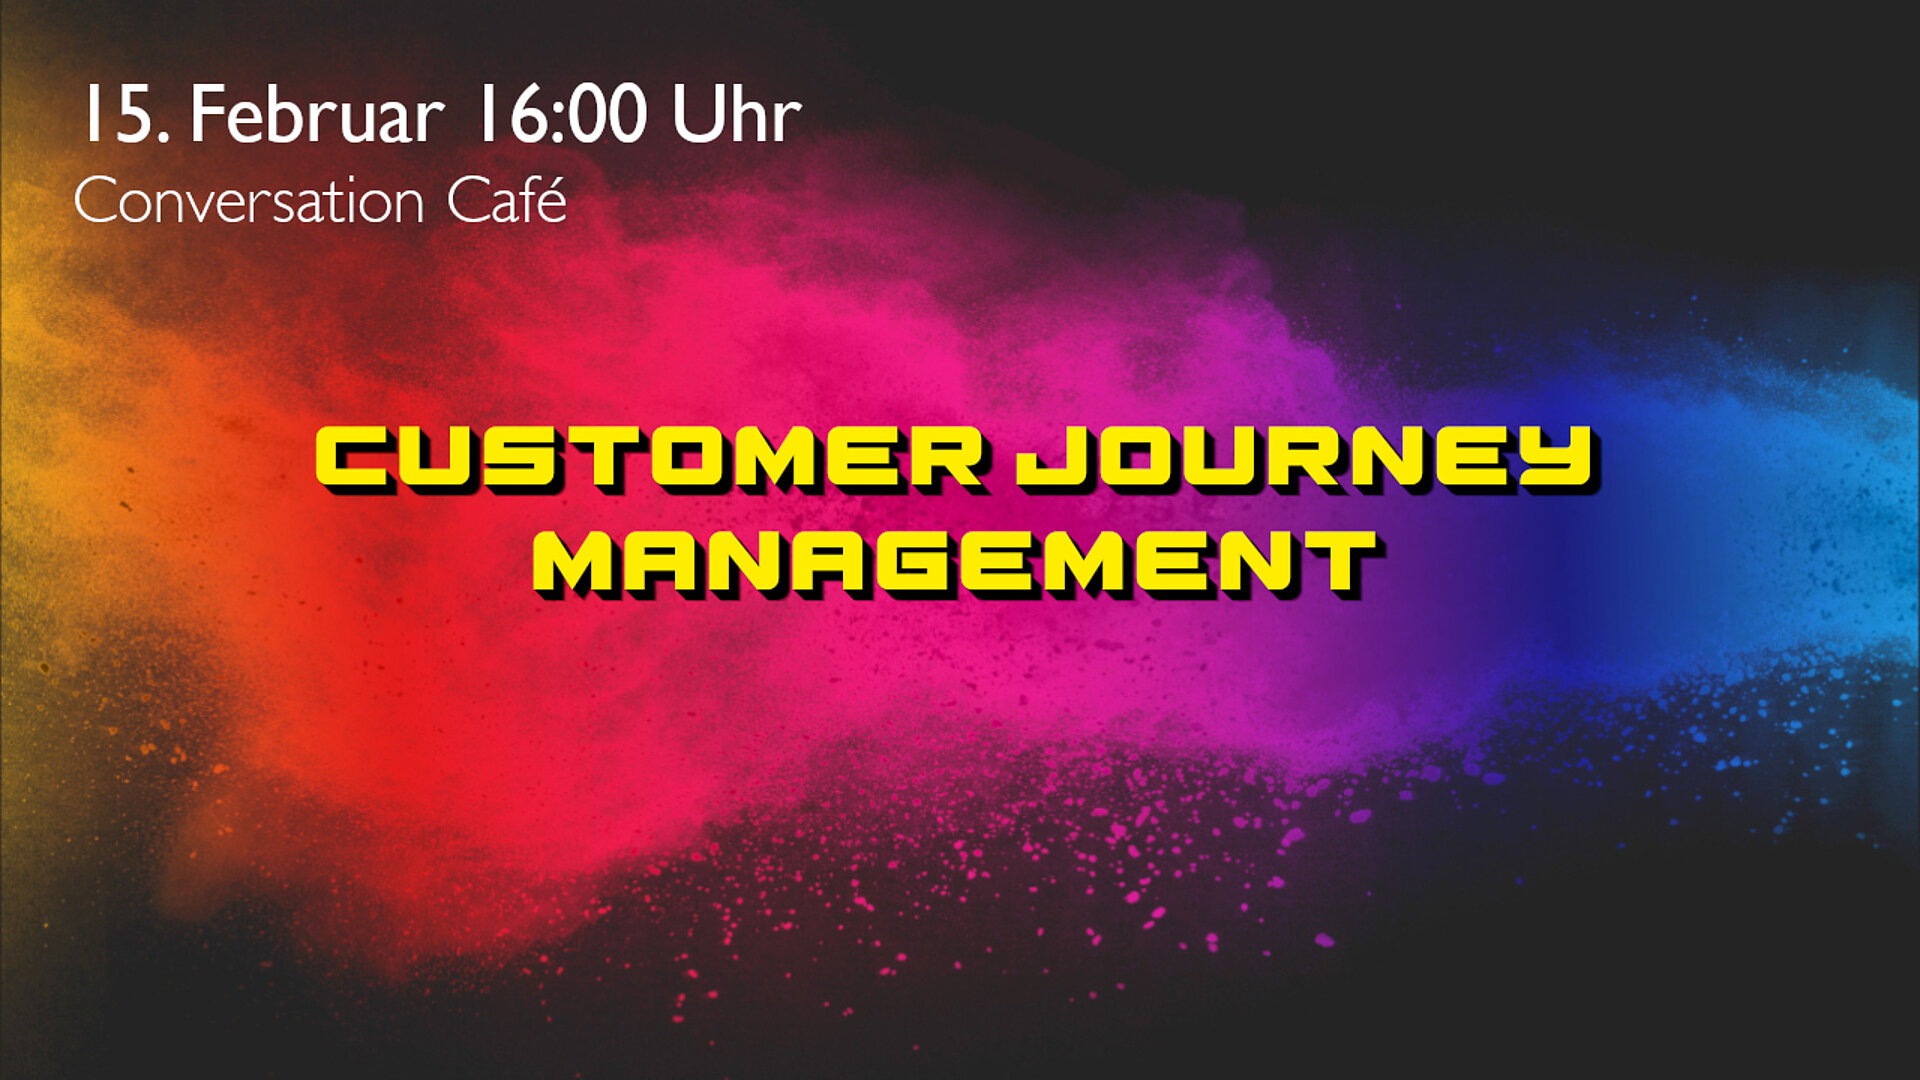 Conversation Café - Customer Journey Management